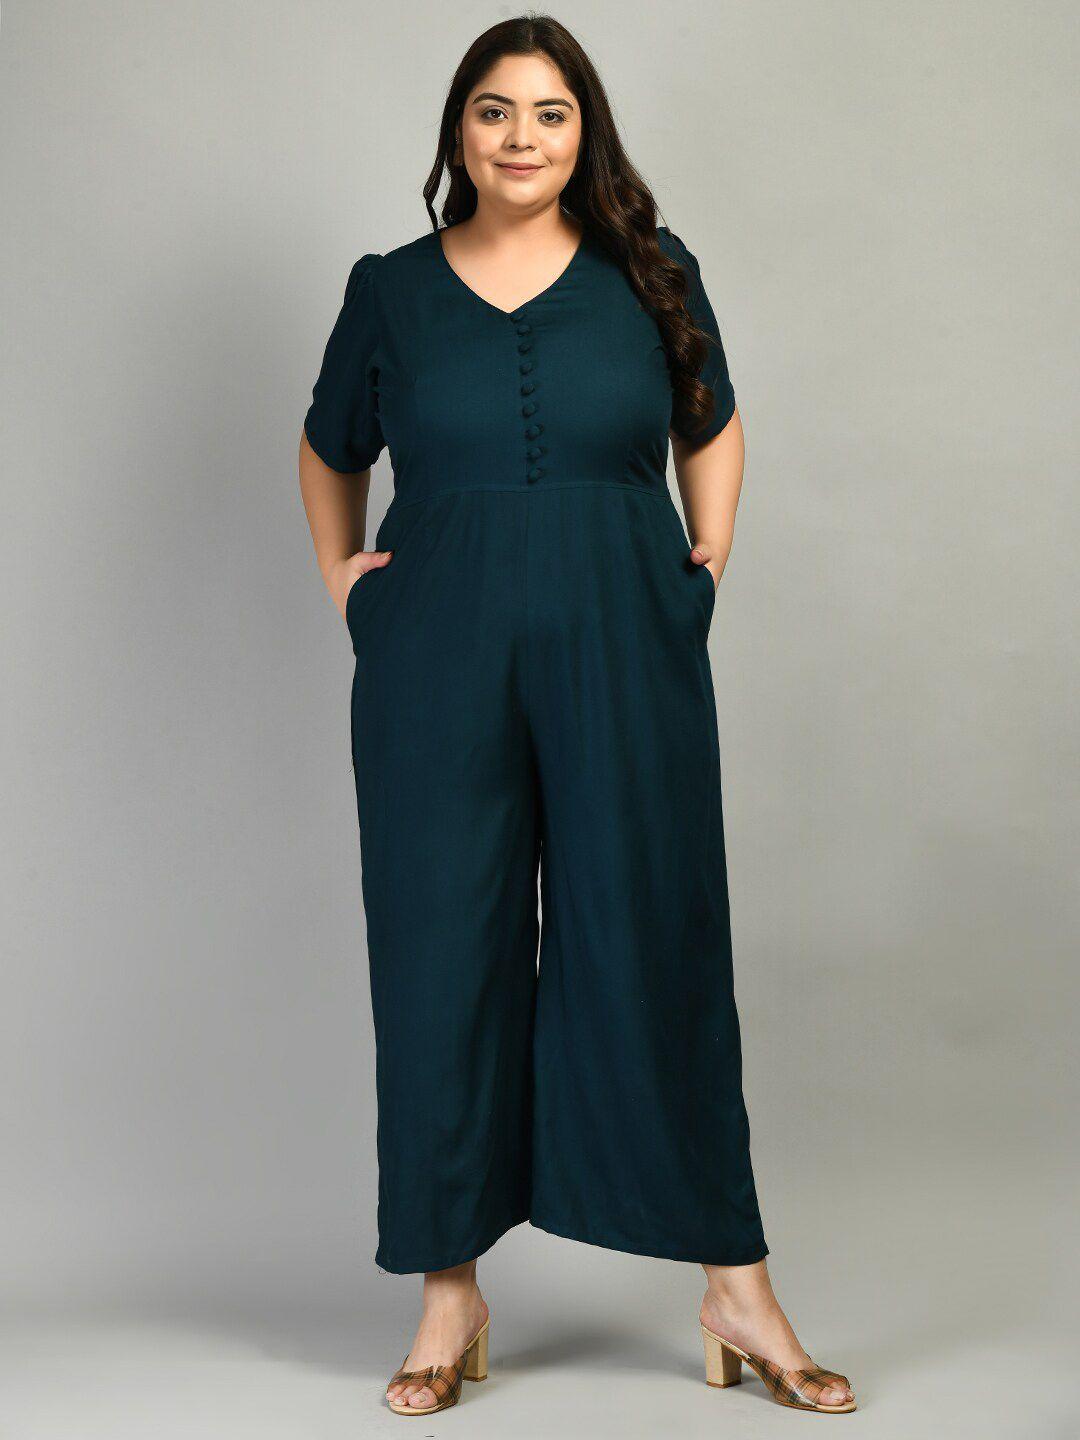 prettyplus by desinoor.com women plus size teal green solid basic jumpsuit